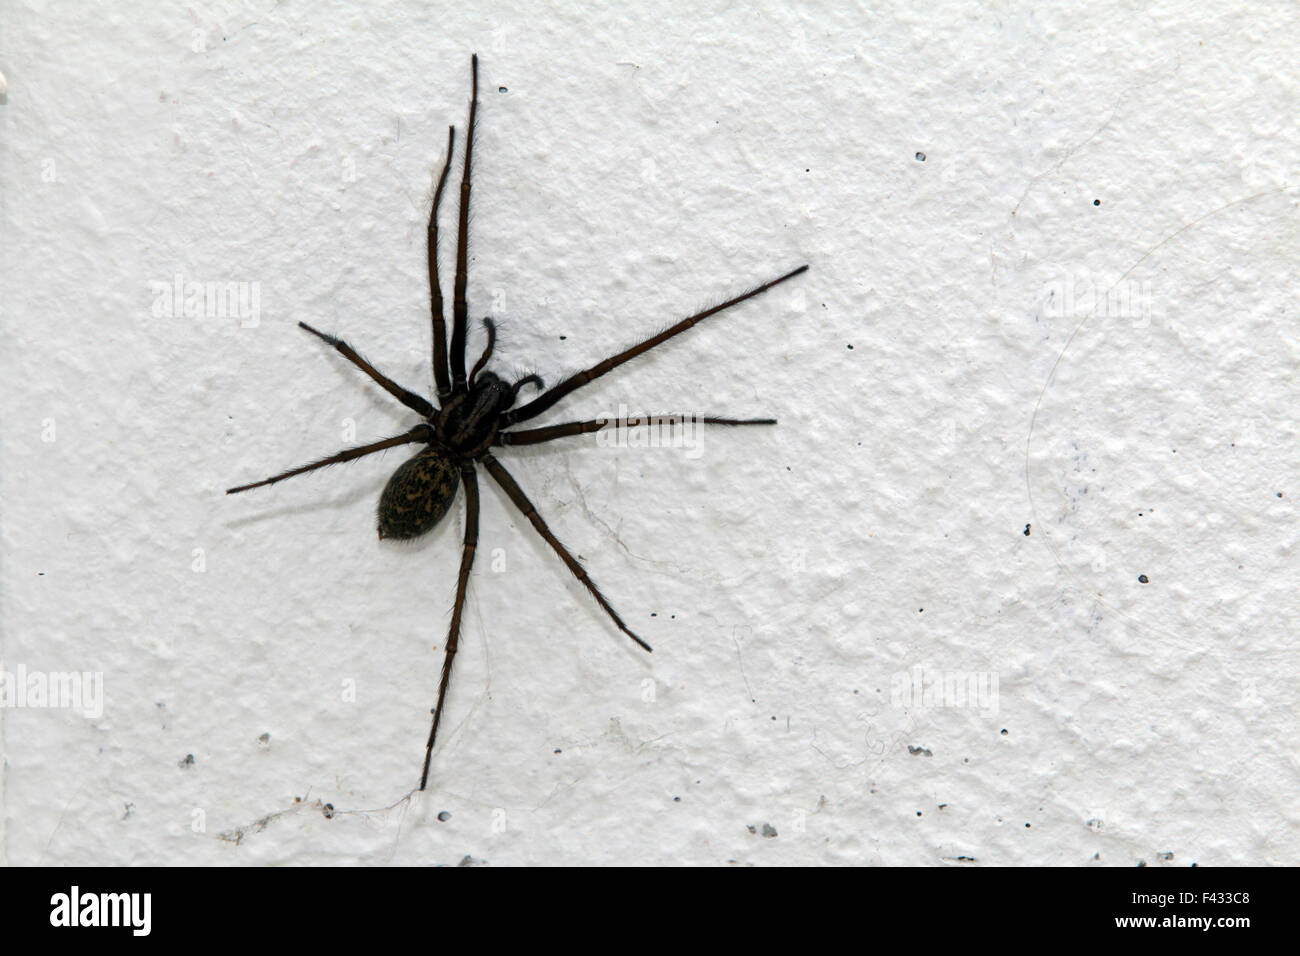 Eratigena atrica, giant house spider Stock Photo